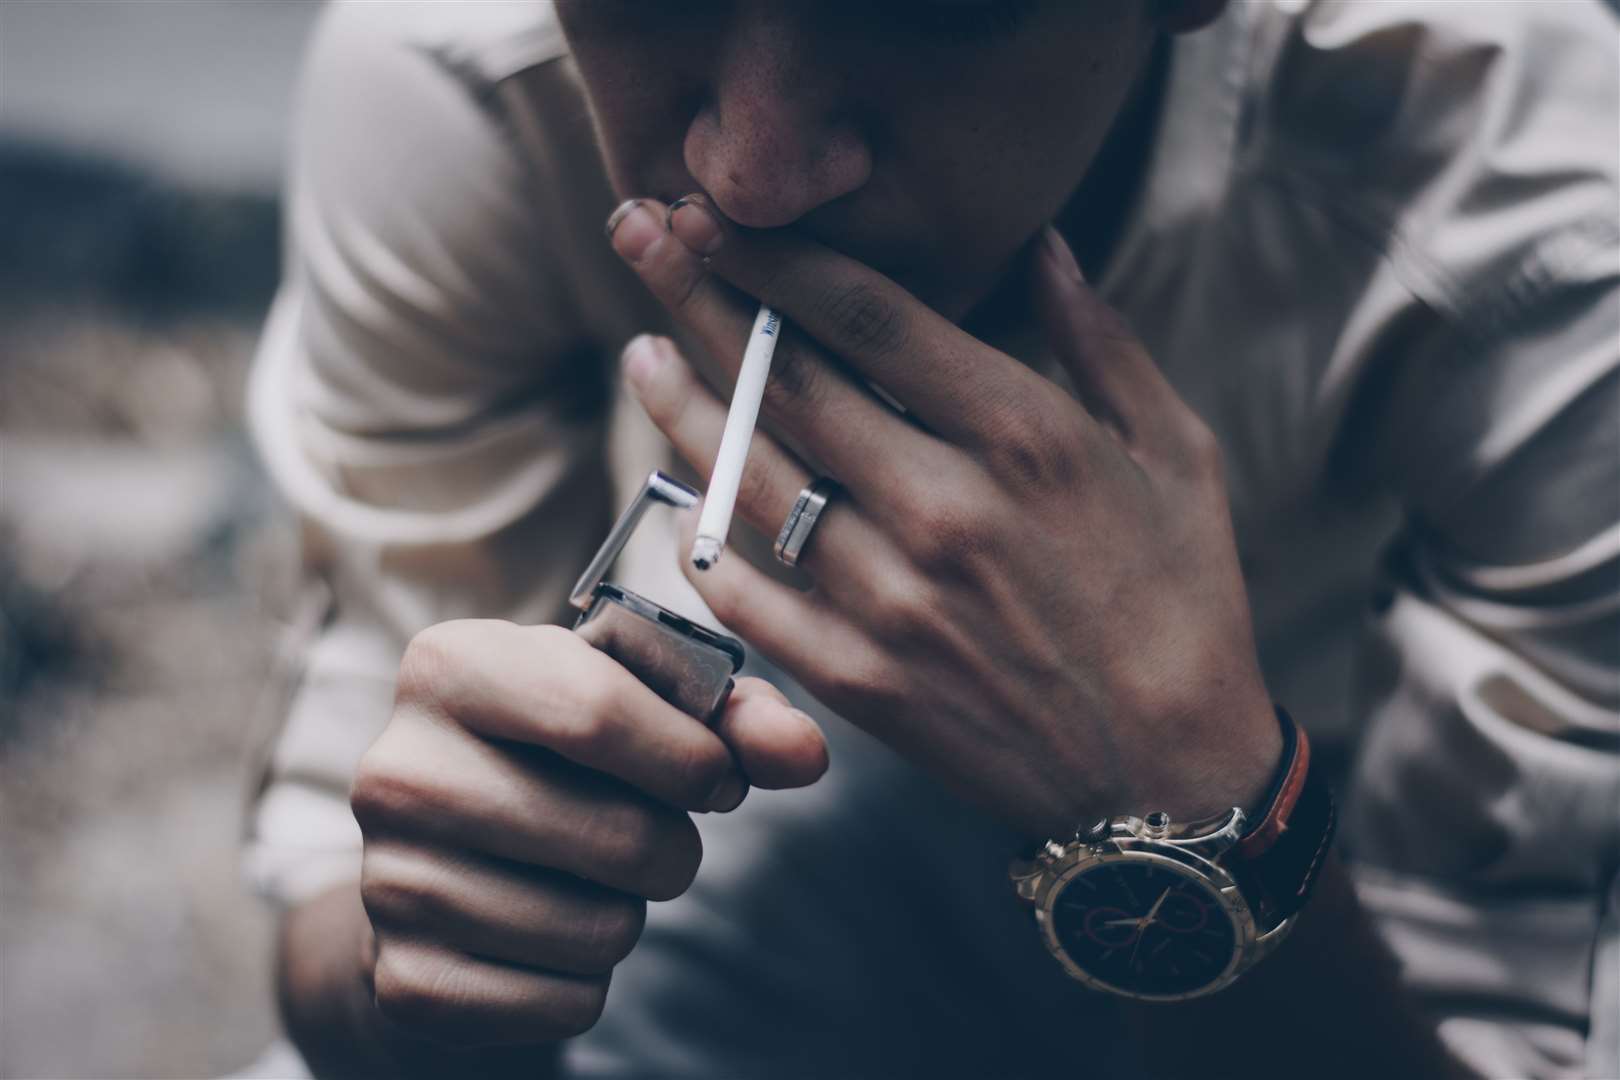 Man smoking a cigarette. Stock image